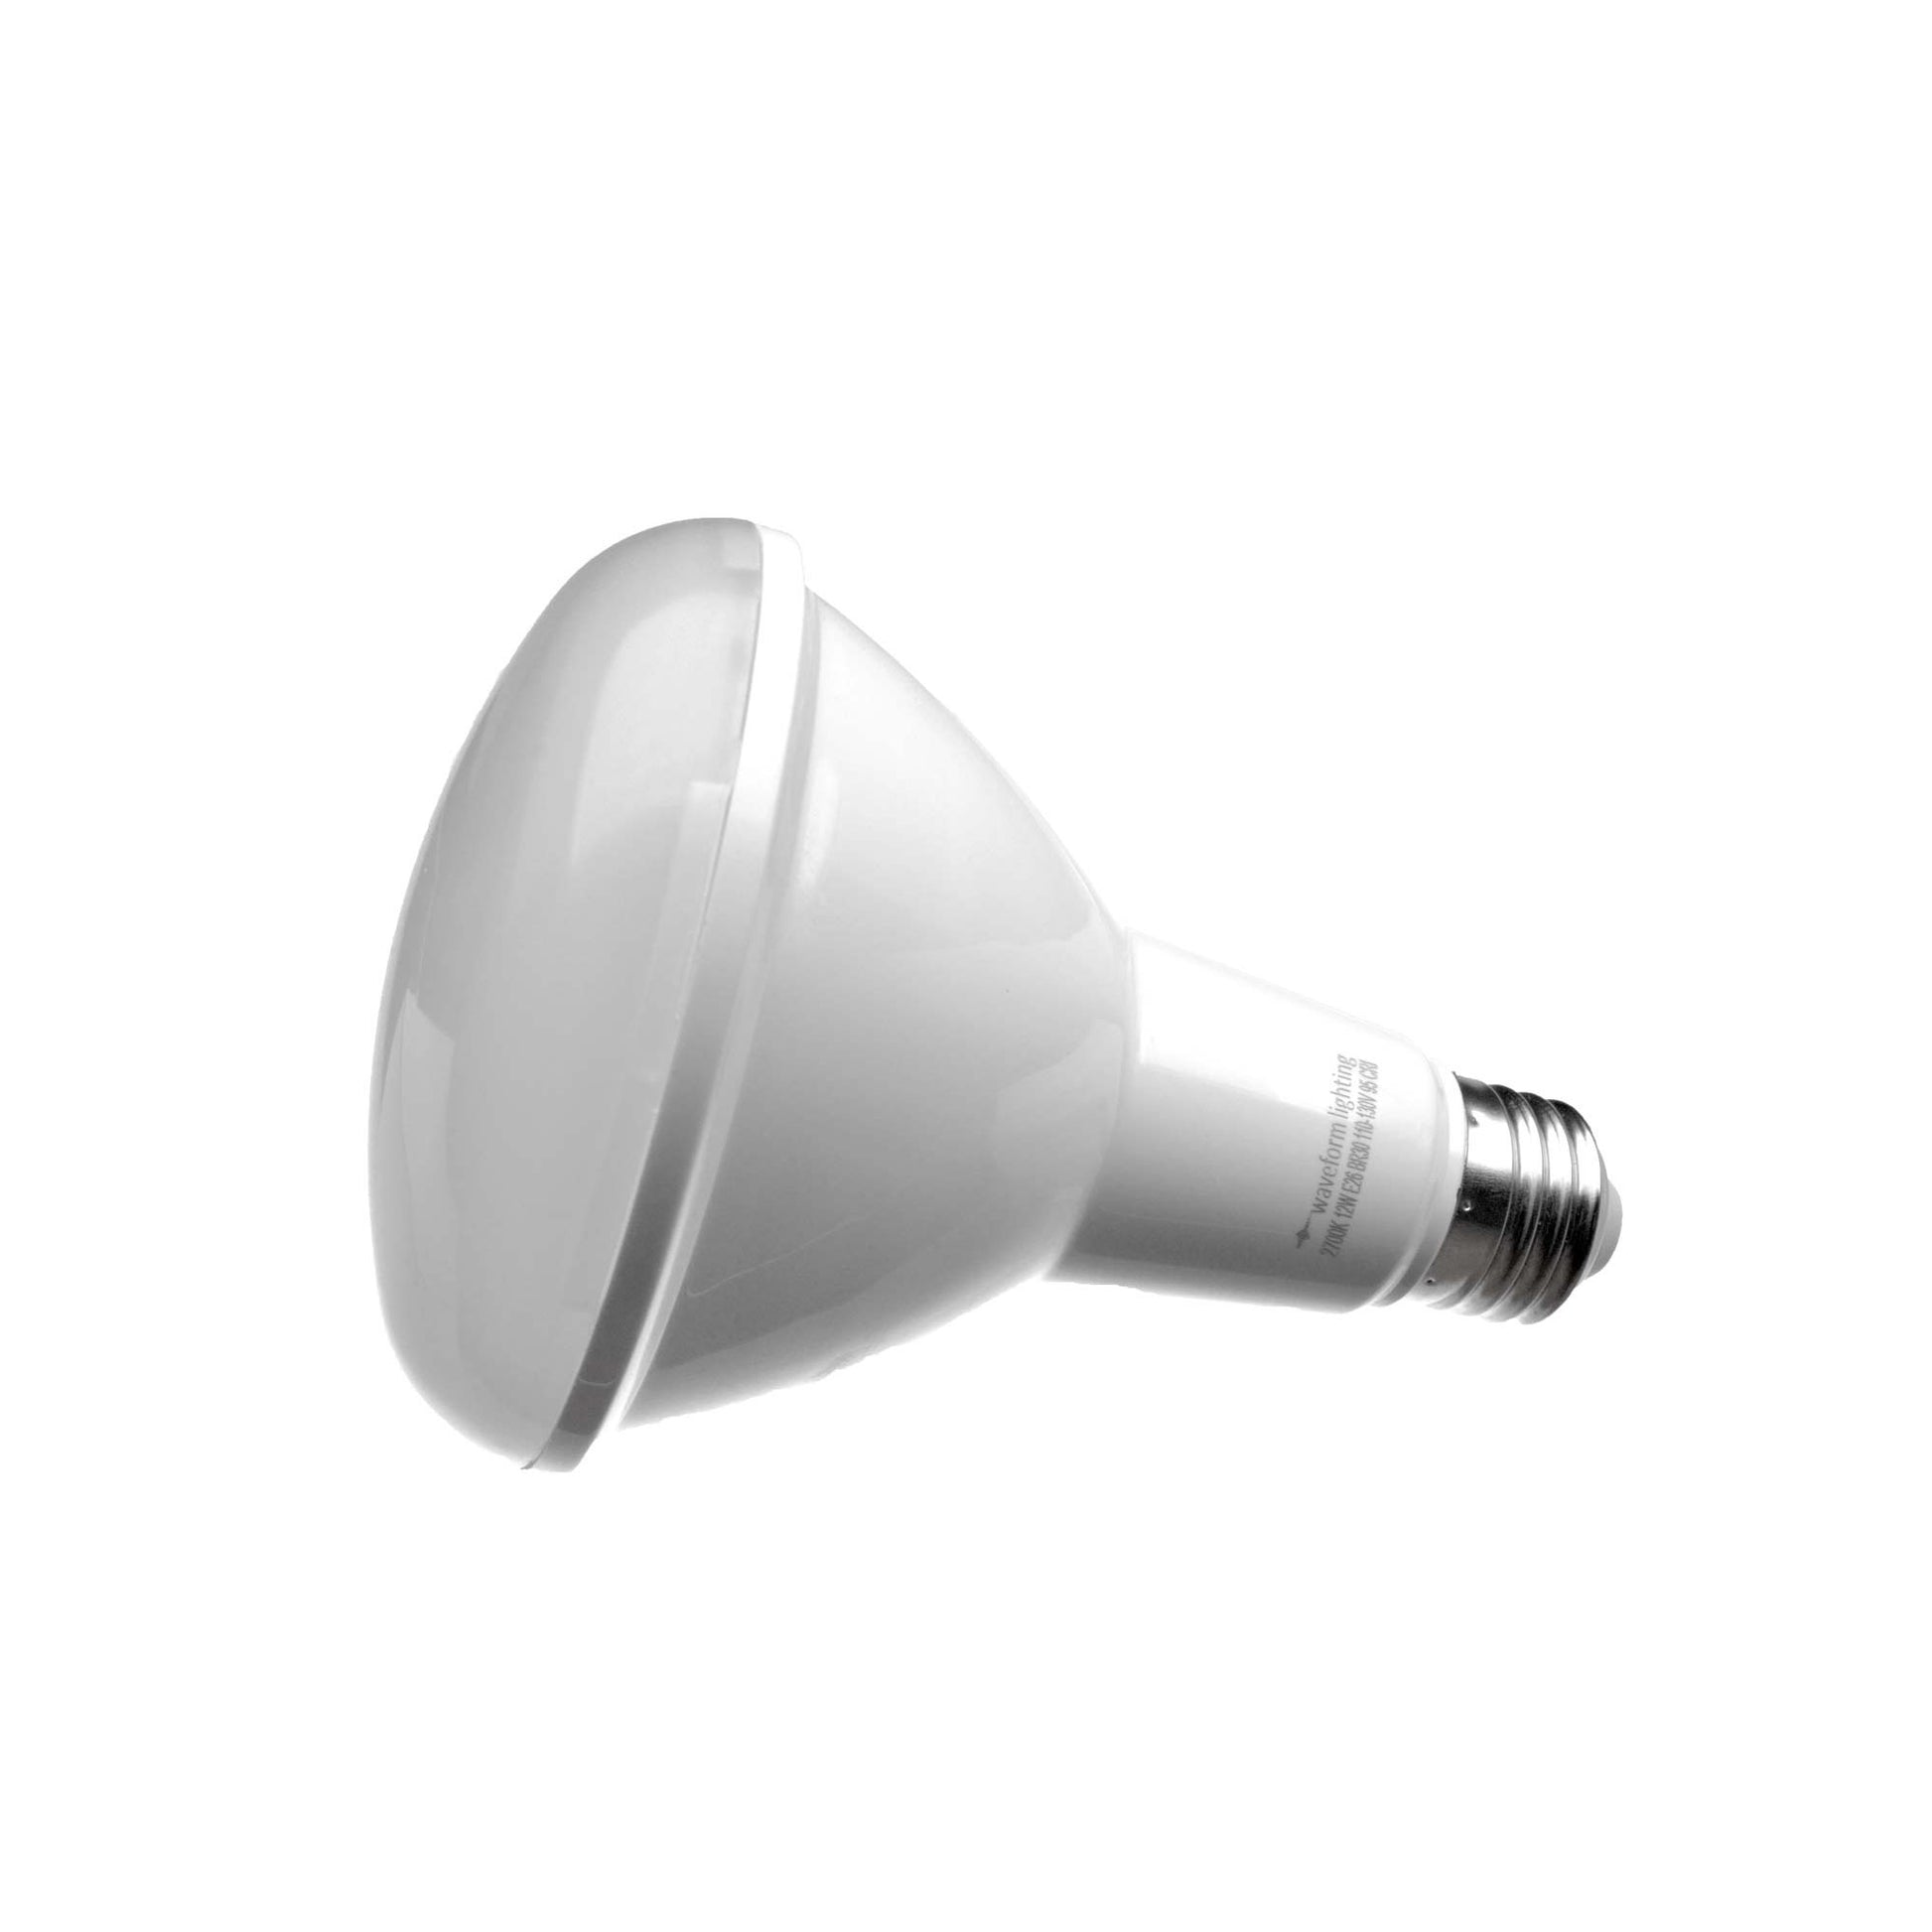 CENTRIC DAYLIGHT™ 95 CRI T5 LED Linear Light Fixture – Waveform Lighting